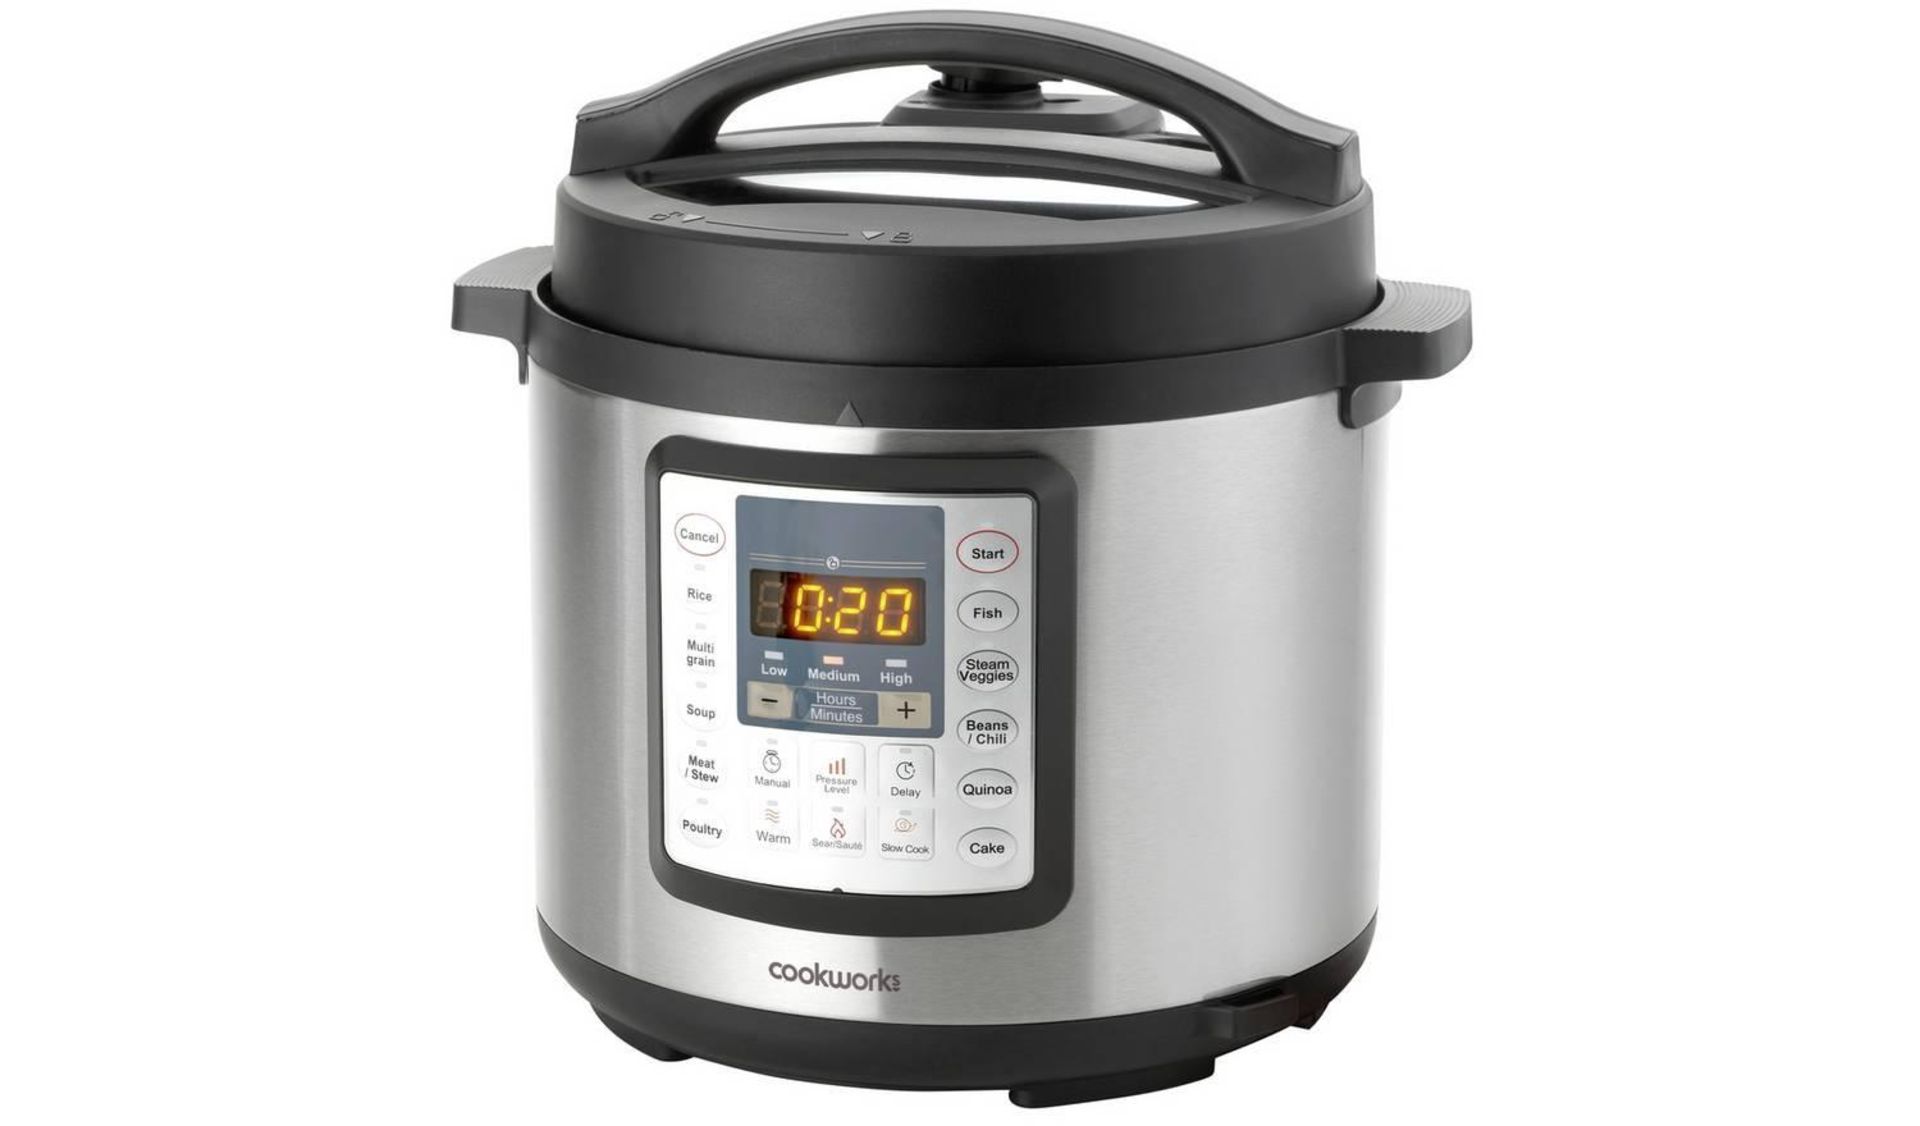 Cookworks 10-in-1 5.5L Digital Pressure Cooker - Silver, £54.99 RRP